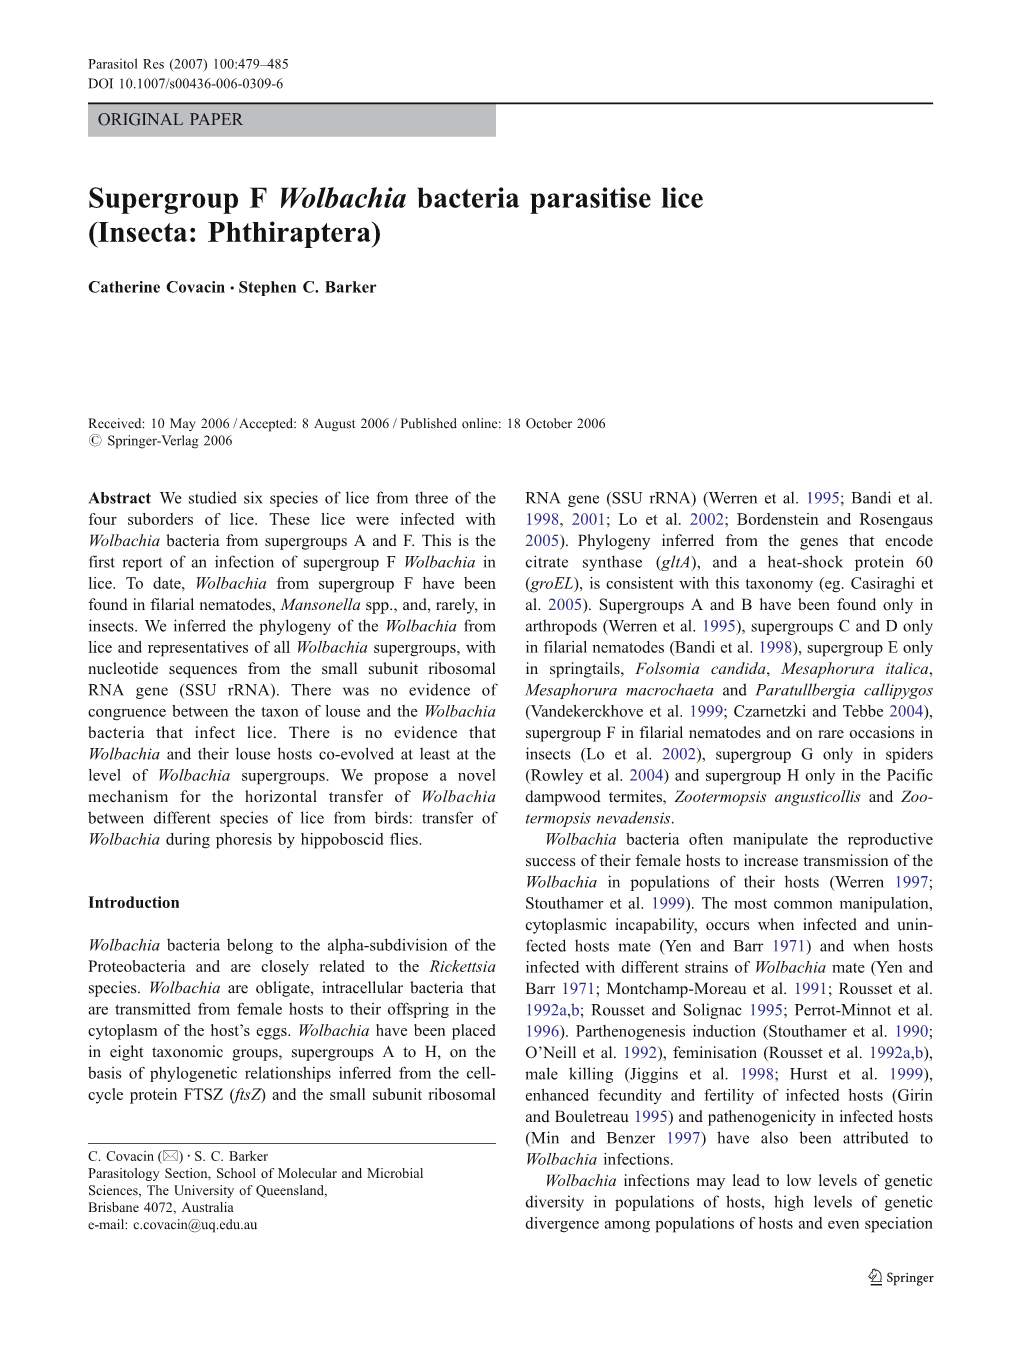 Supergroup F Wolbachia Bacteria Parasitise Lice (Insecta: Phthiraptera)